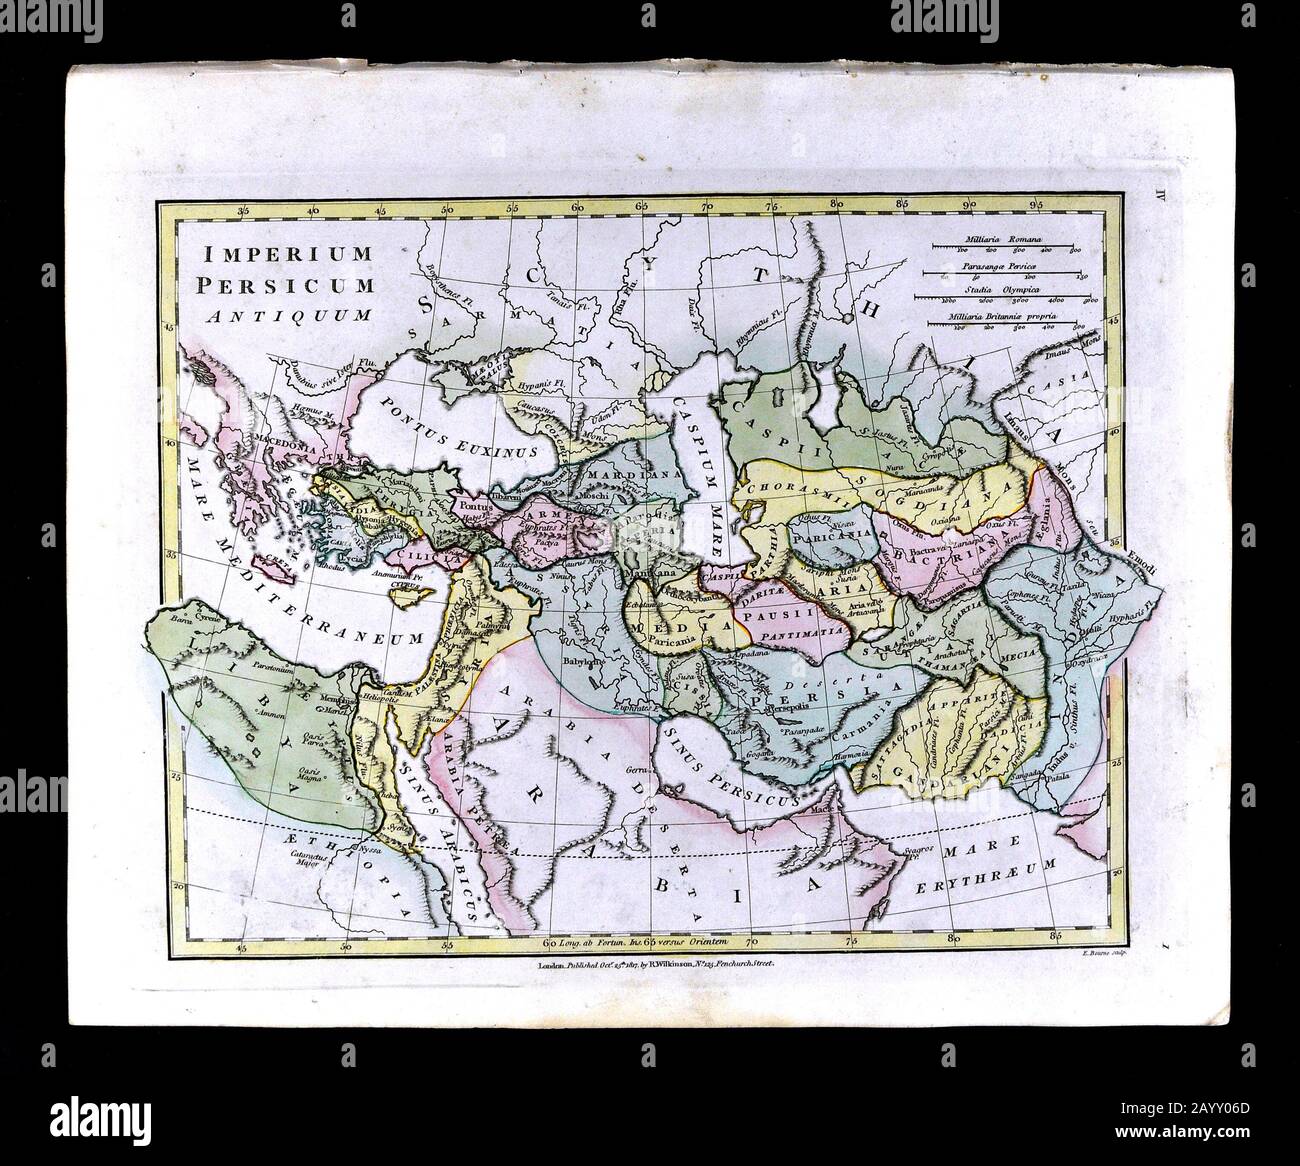 1808 Wilkinson Karte Persianisches Imperium Persicum Antiquum Antiquum Antiquum Antike Nahost Türkei Syrien Ägypten Iran Irak Afghanistan Stockfoto